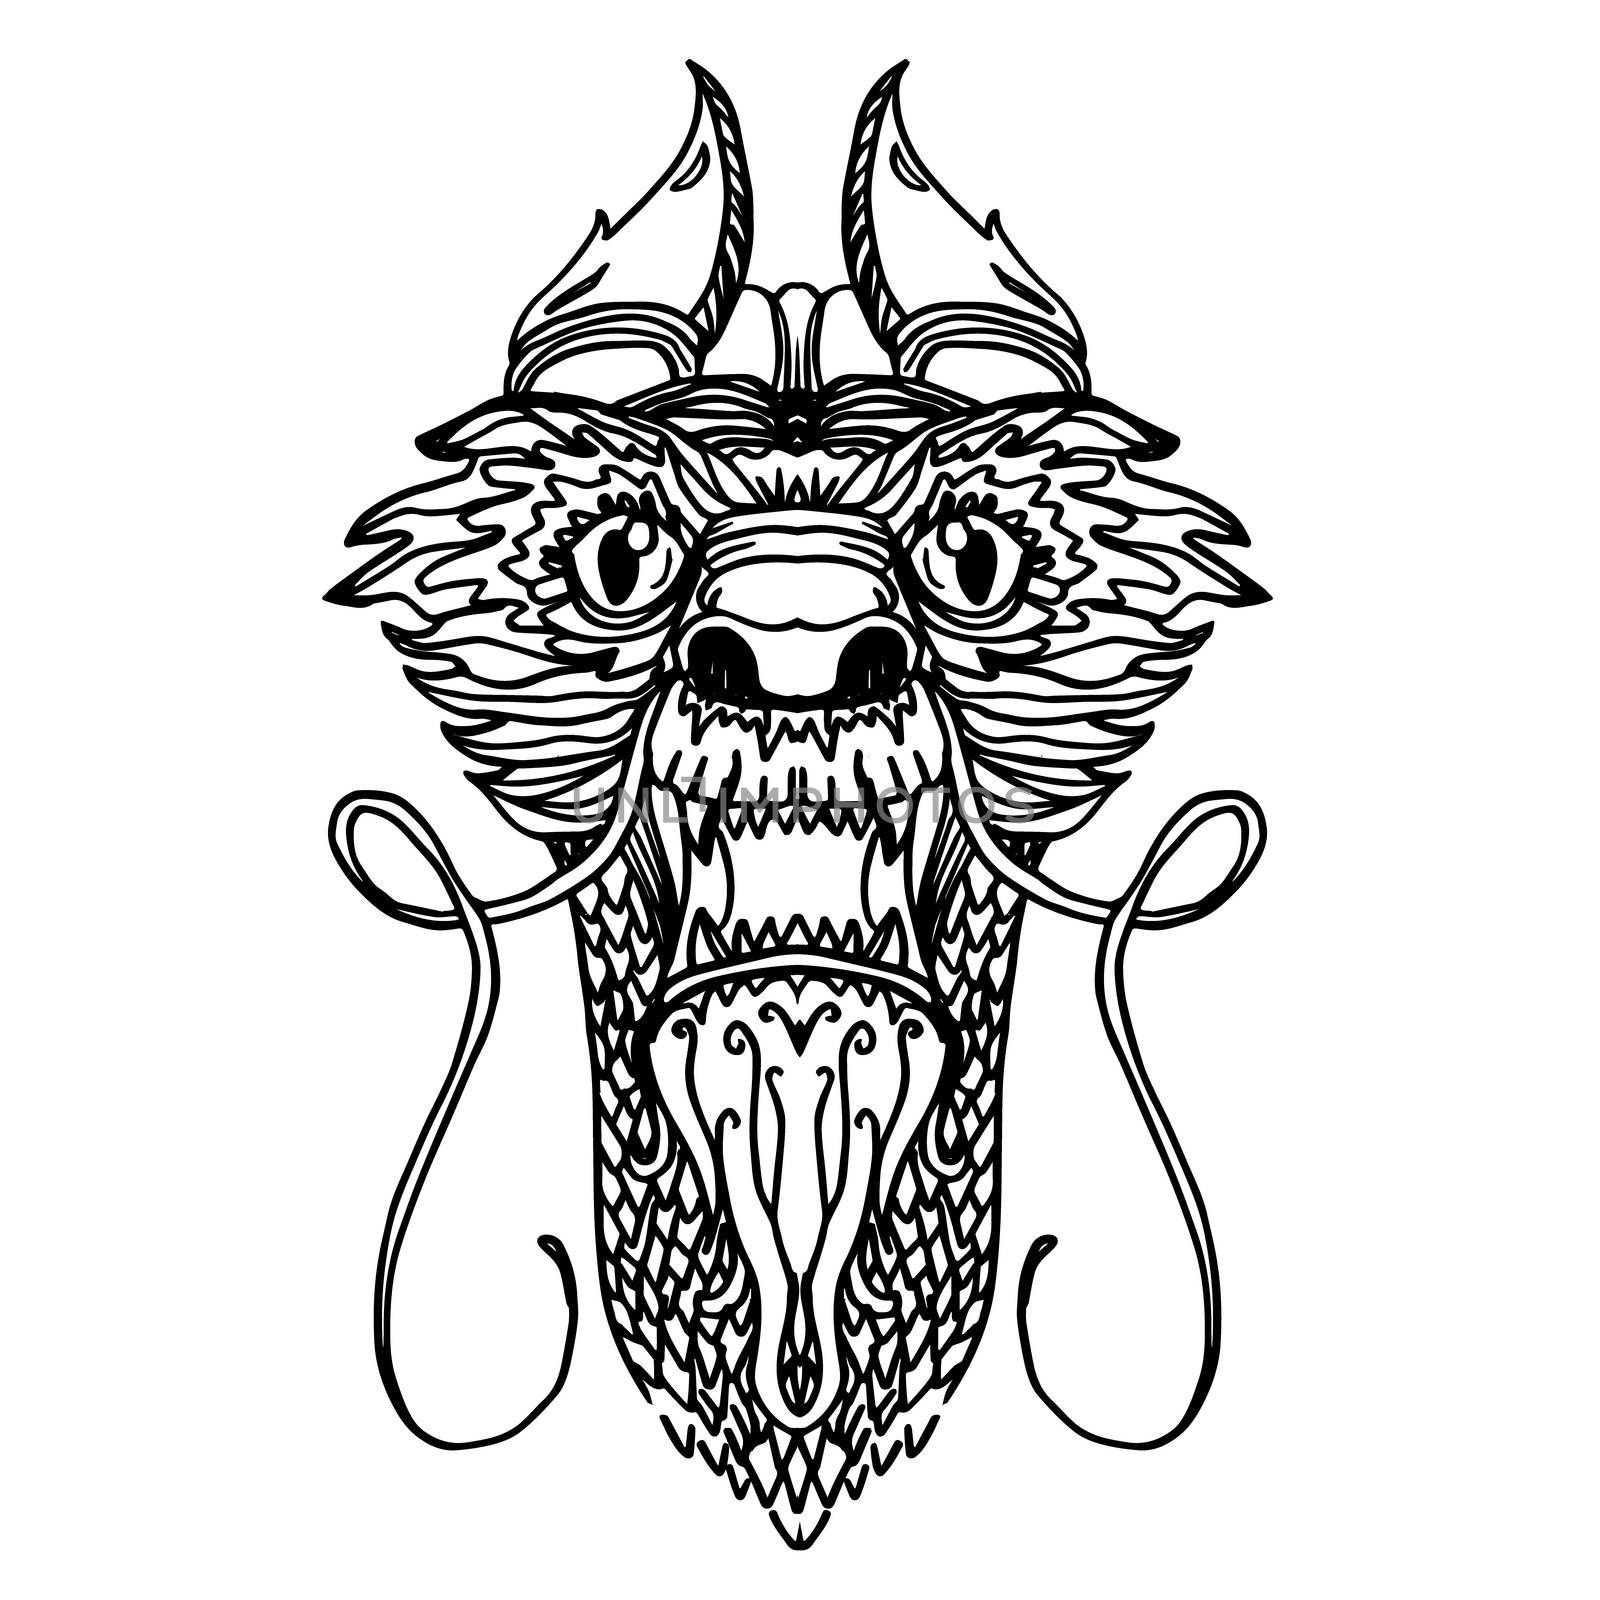 Dragon Head in tattoo and cartoon style. Vector